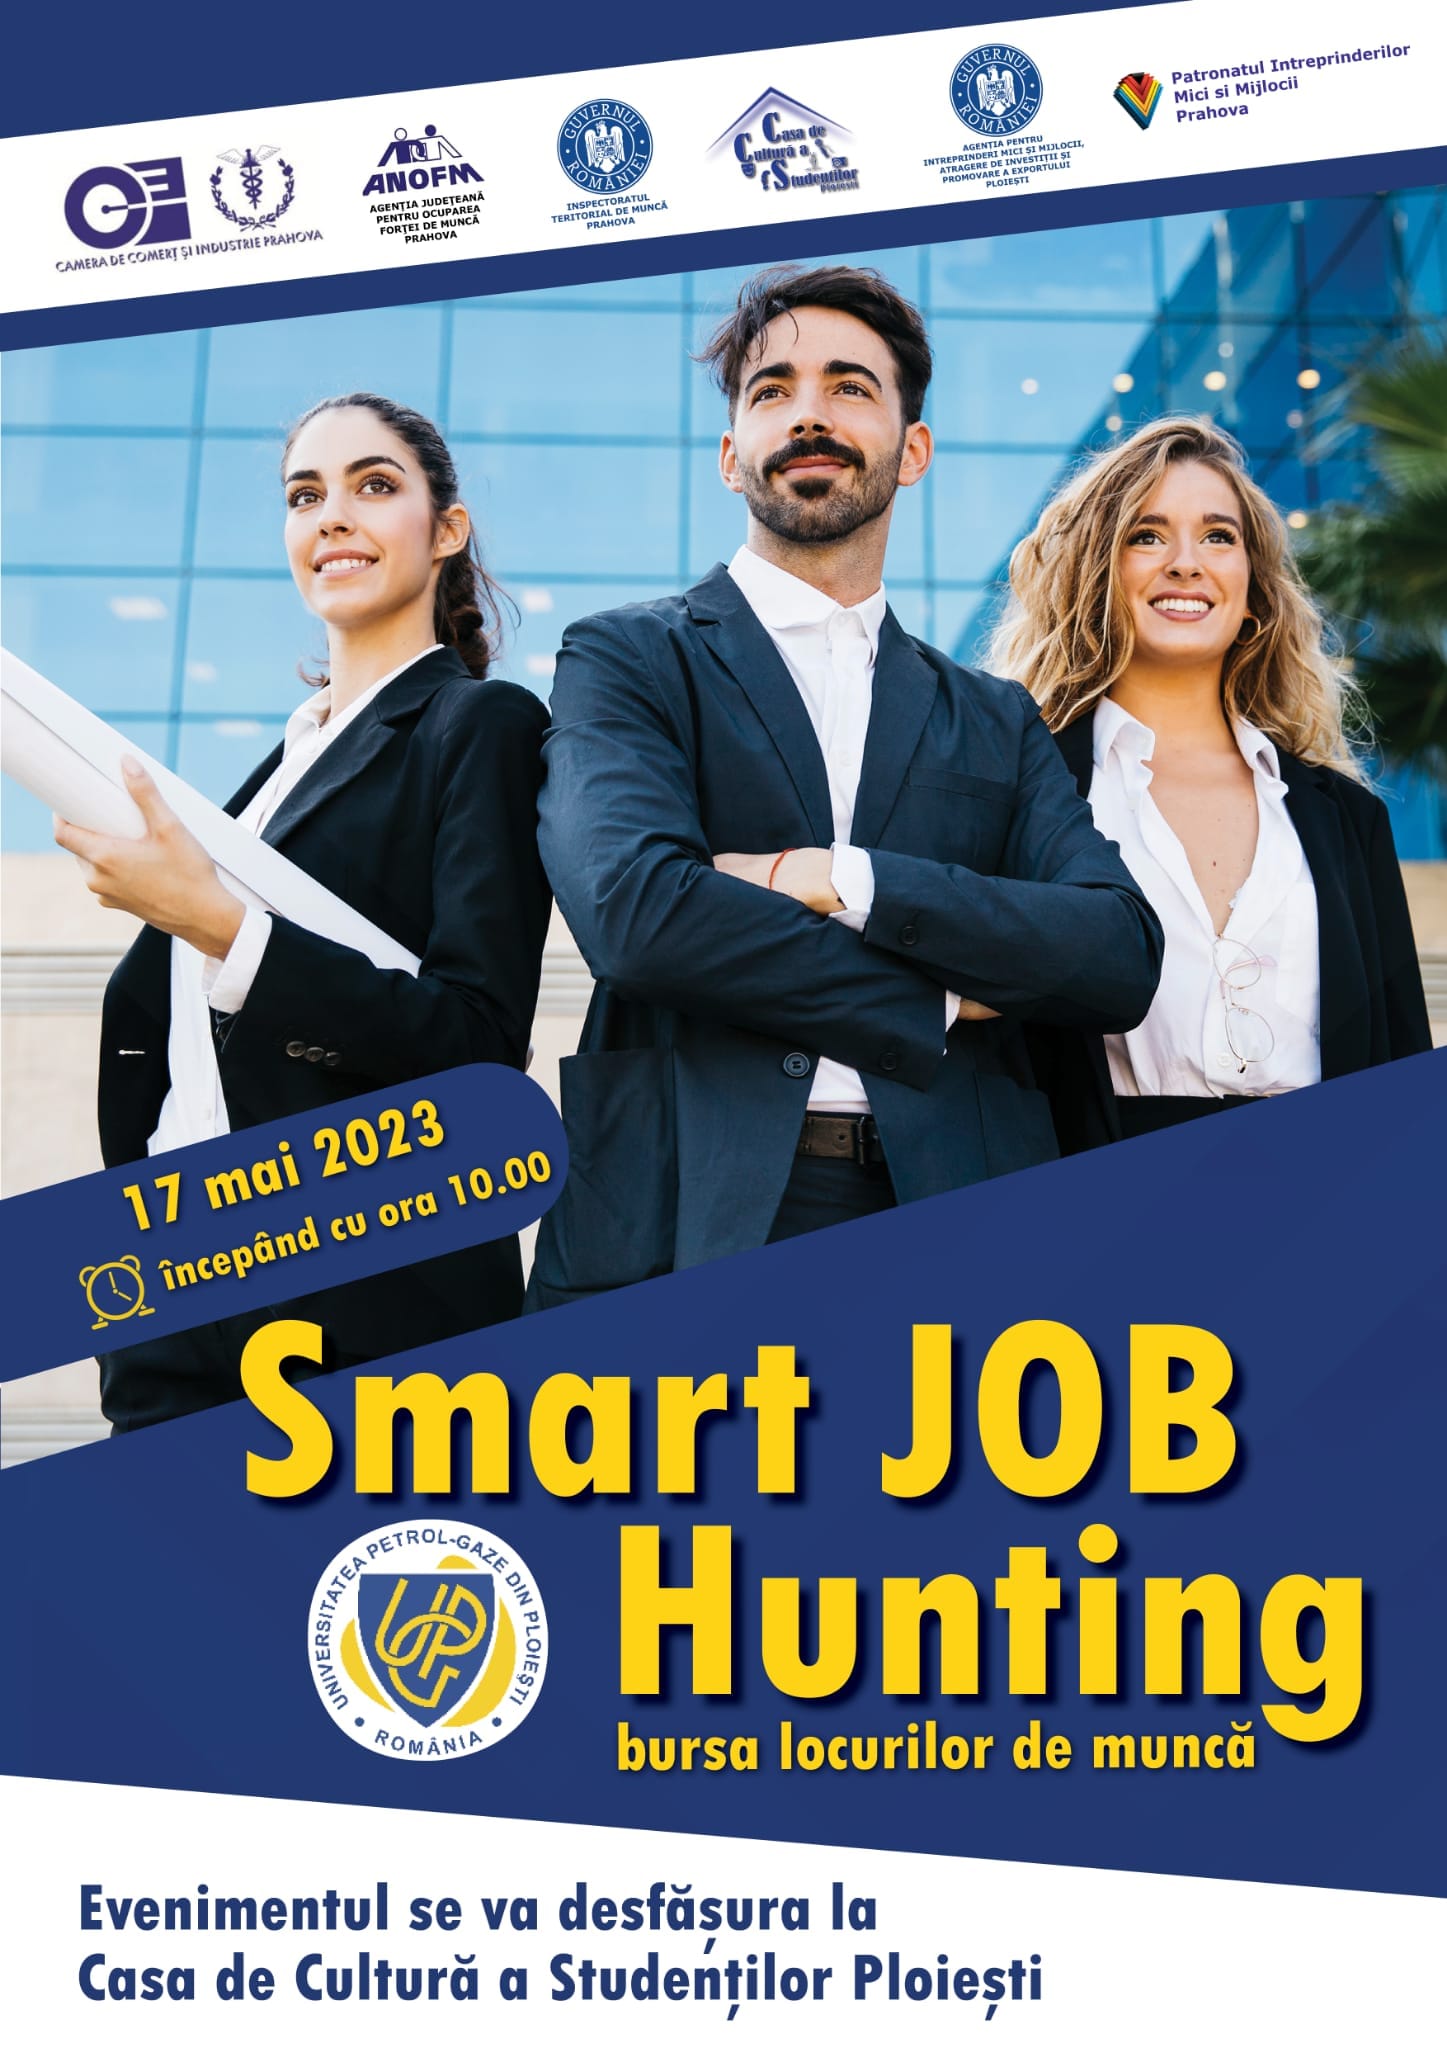 SMART JOB HUNTING – Bursa locurilor de munca